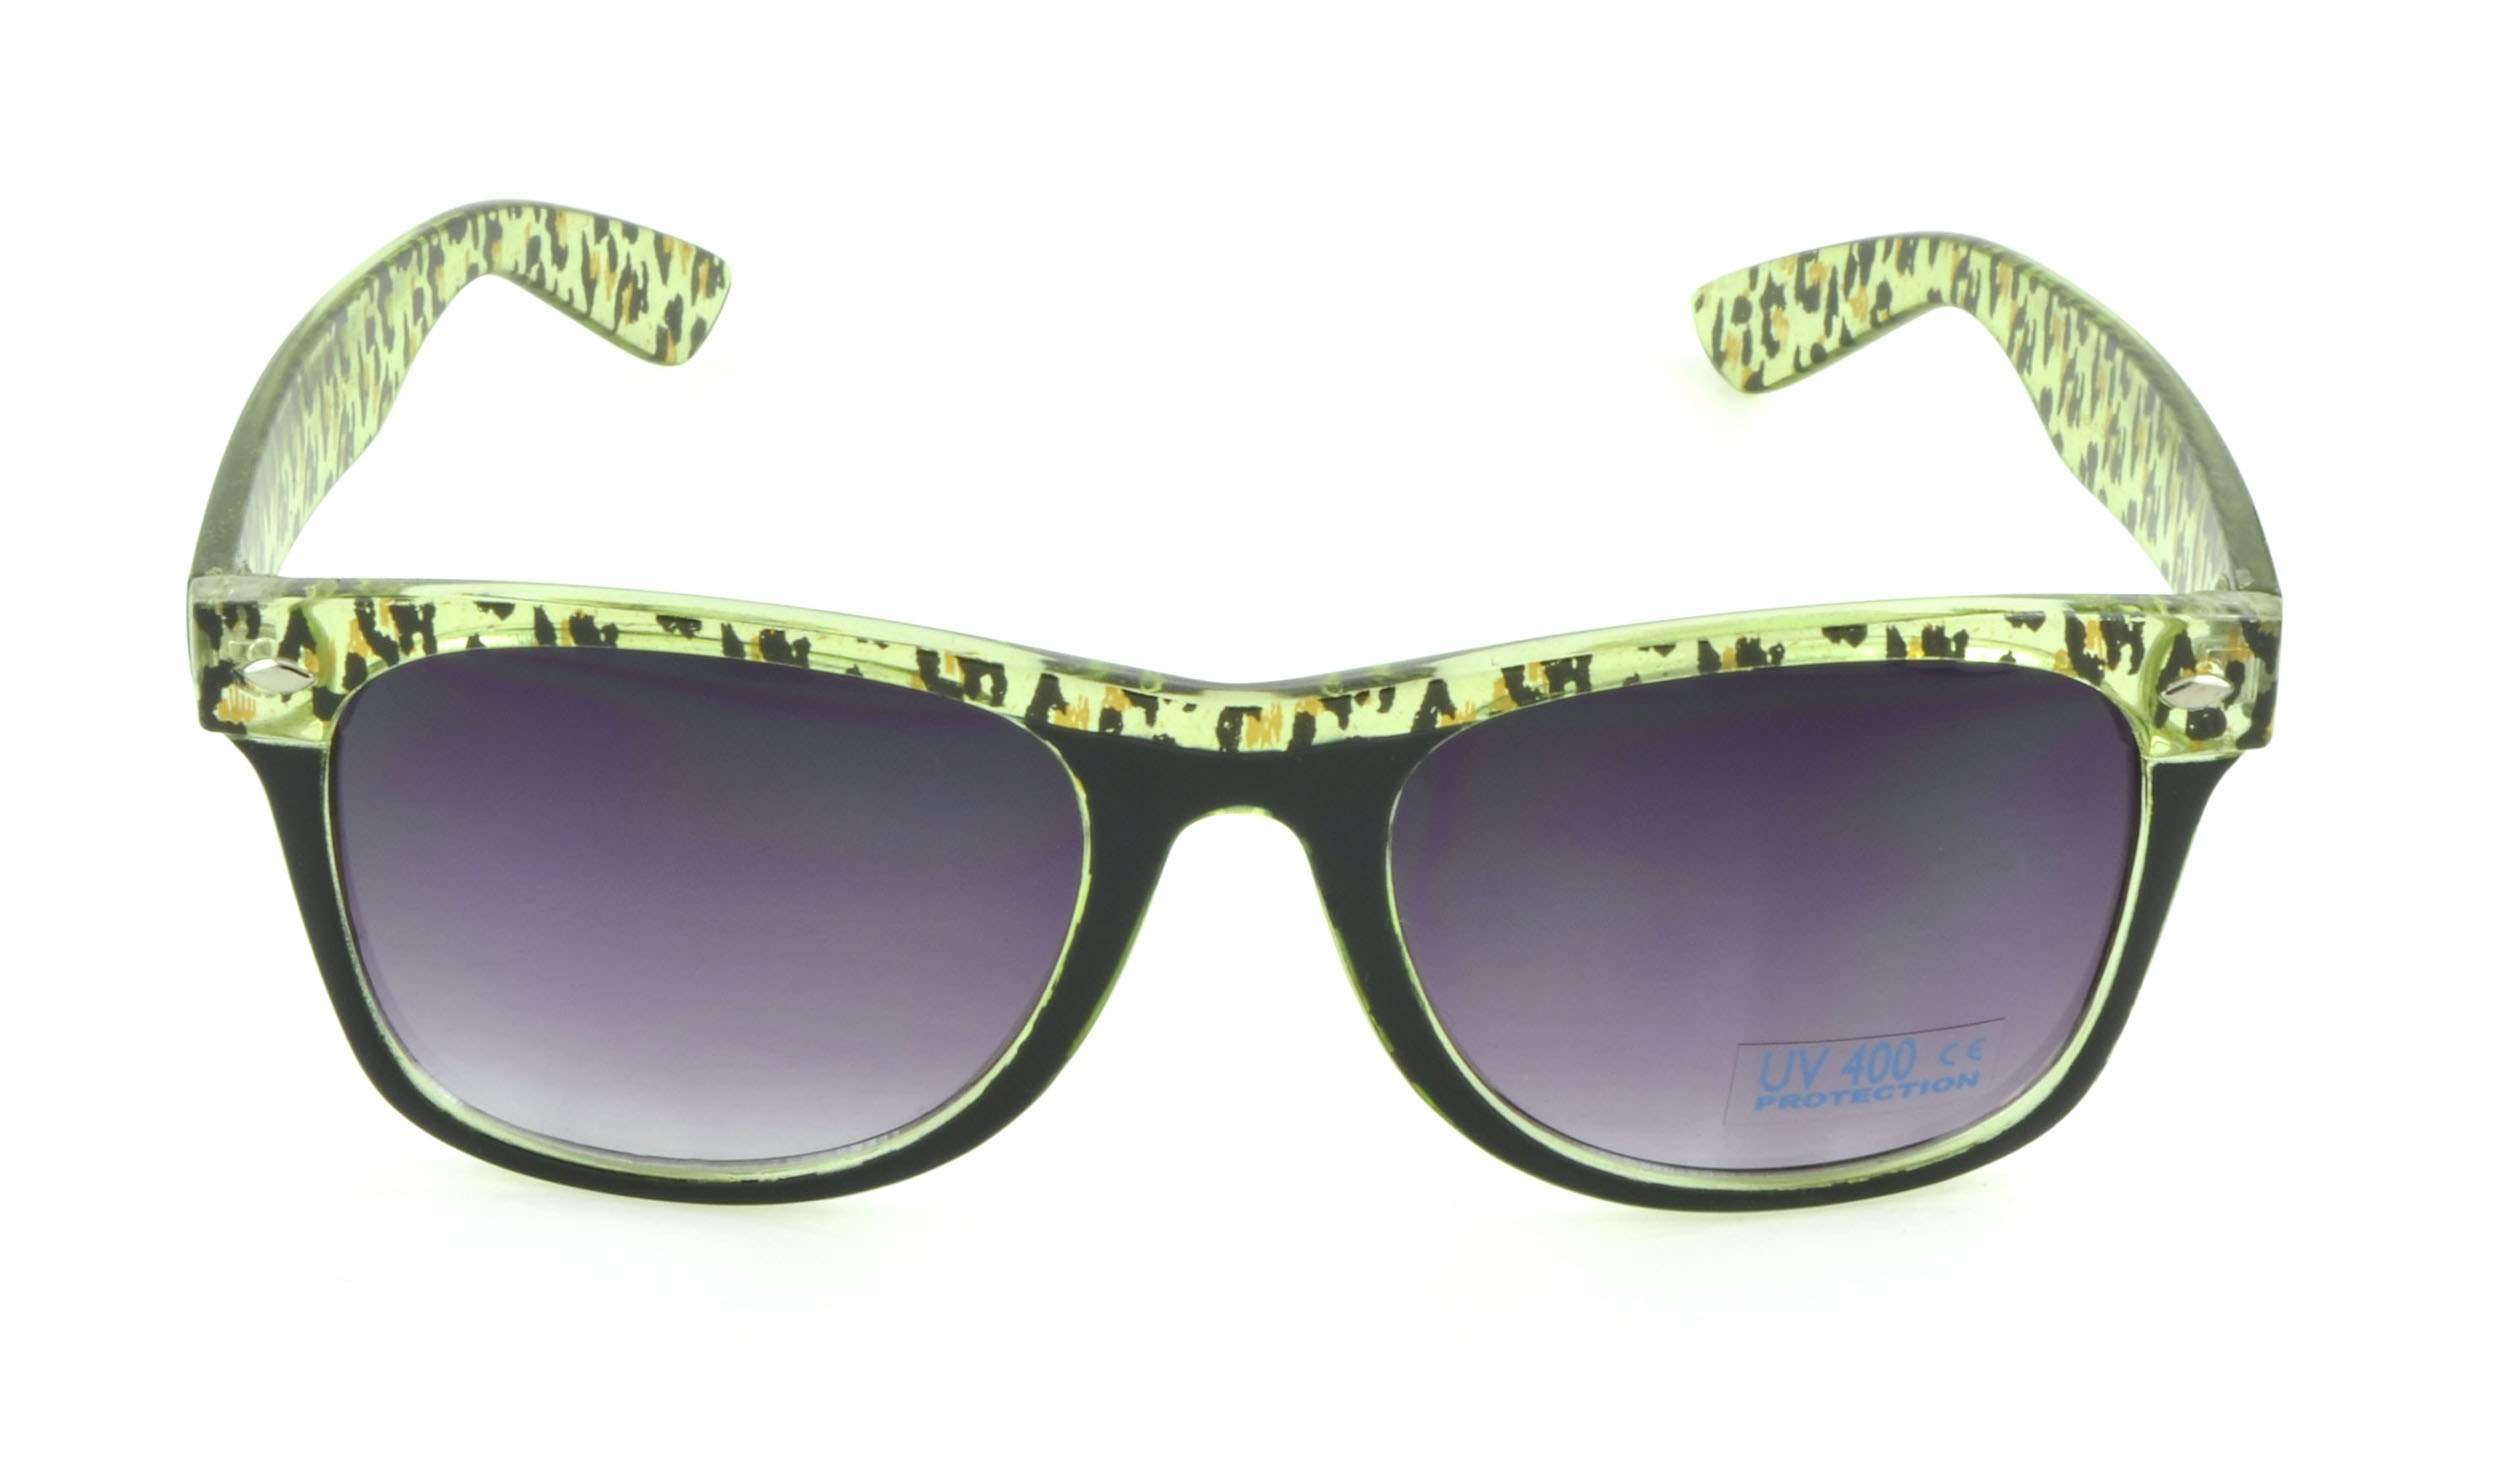 Belle Donne - Wayfarer Style Sunglasses Trendy Cheap Sunglasses High Quality Animal Print - Green 